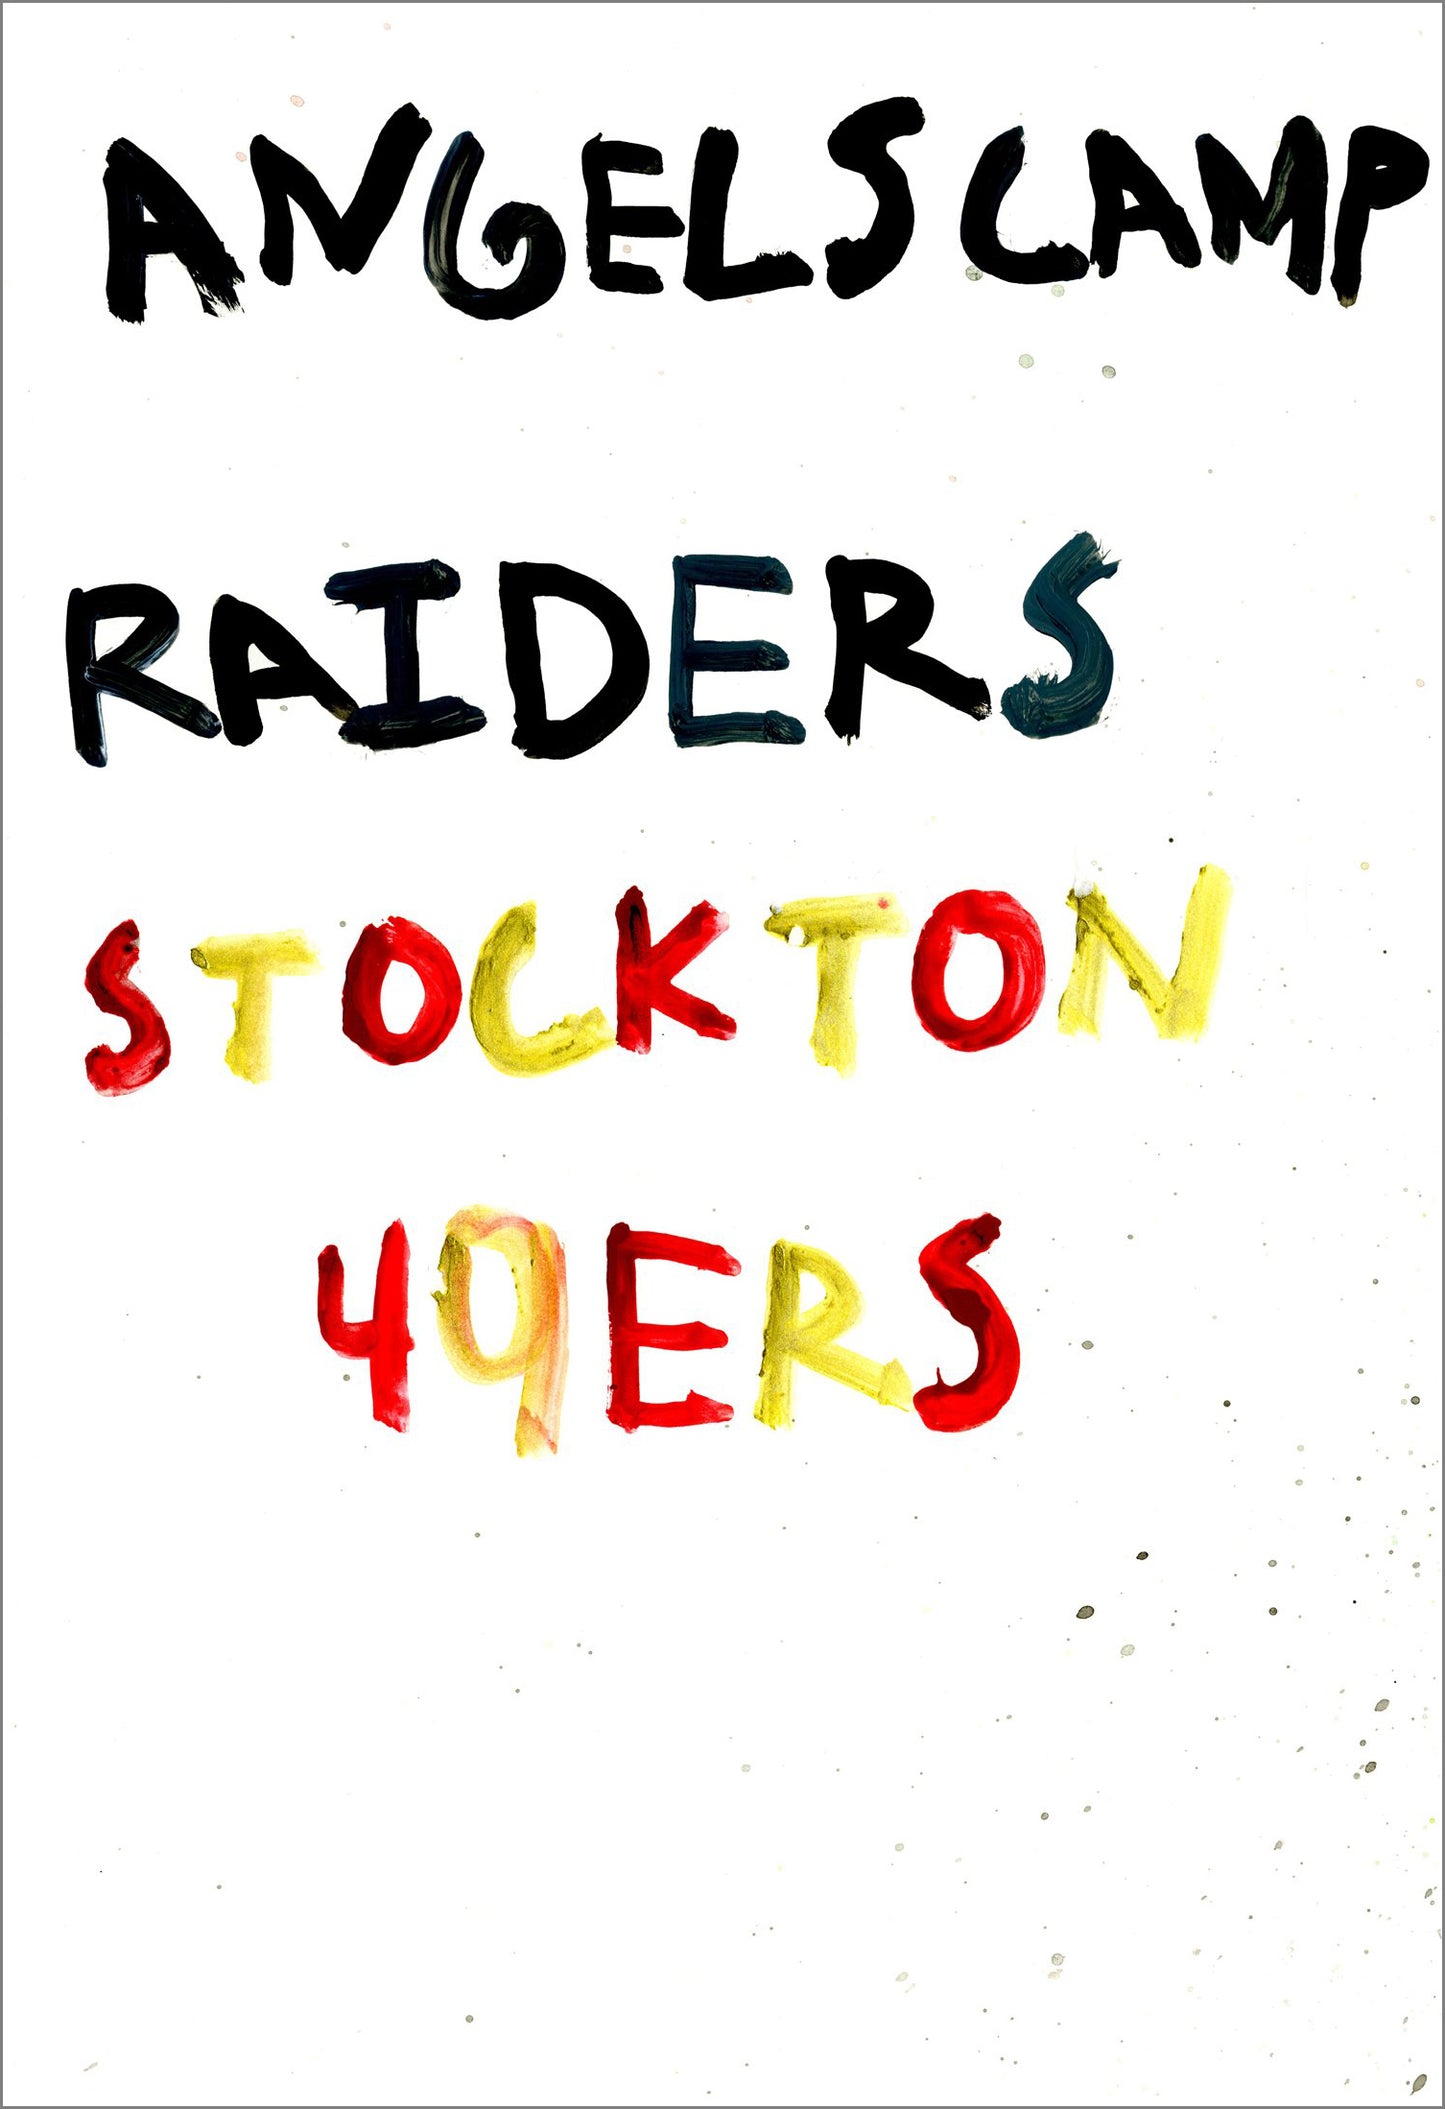 Angels Camp Raiders Stockton 49ers (D5224)